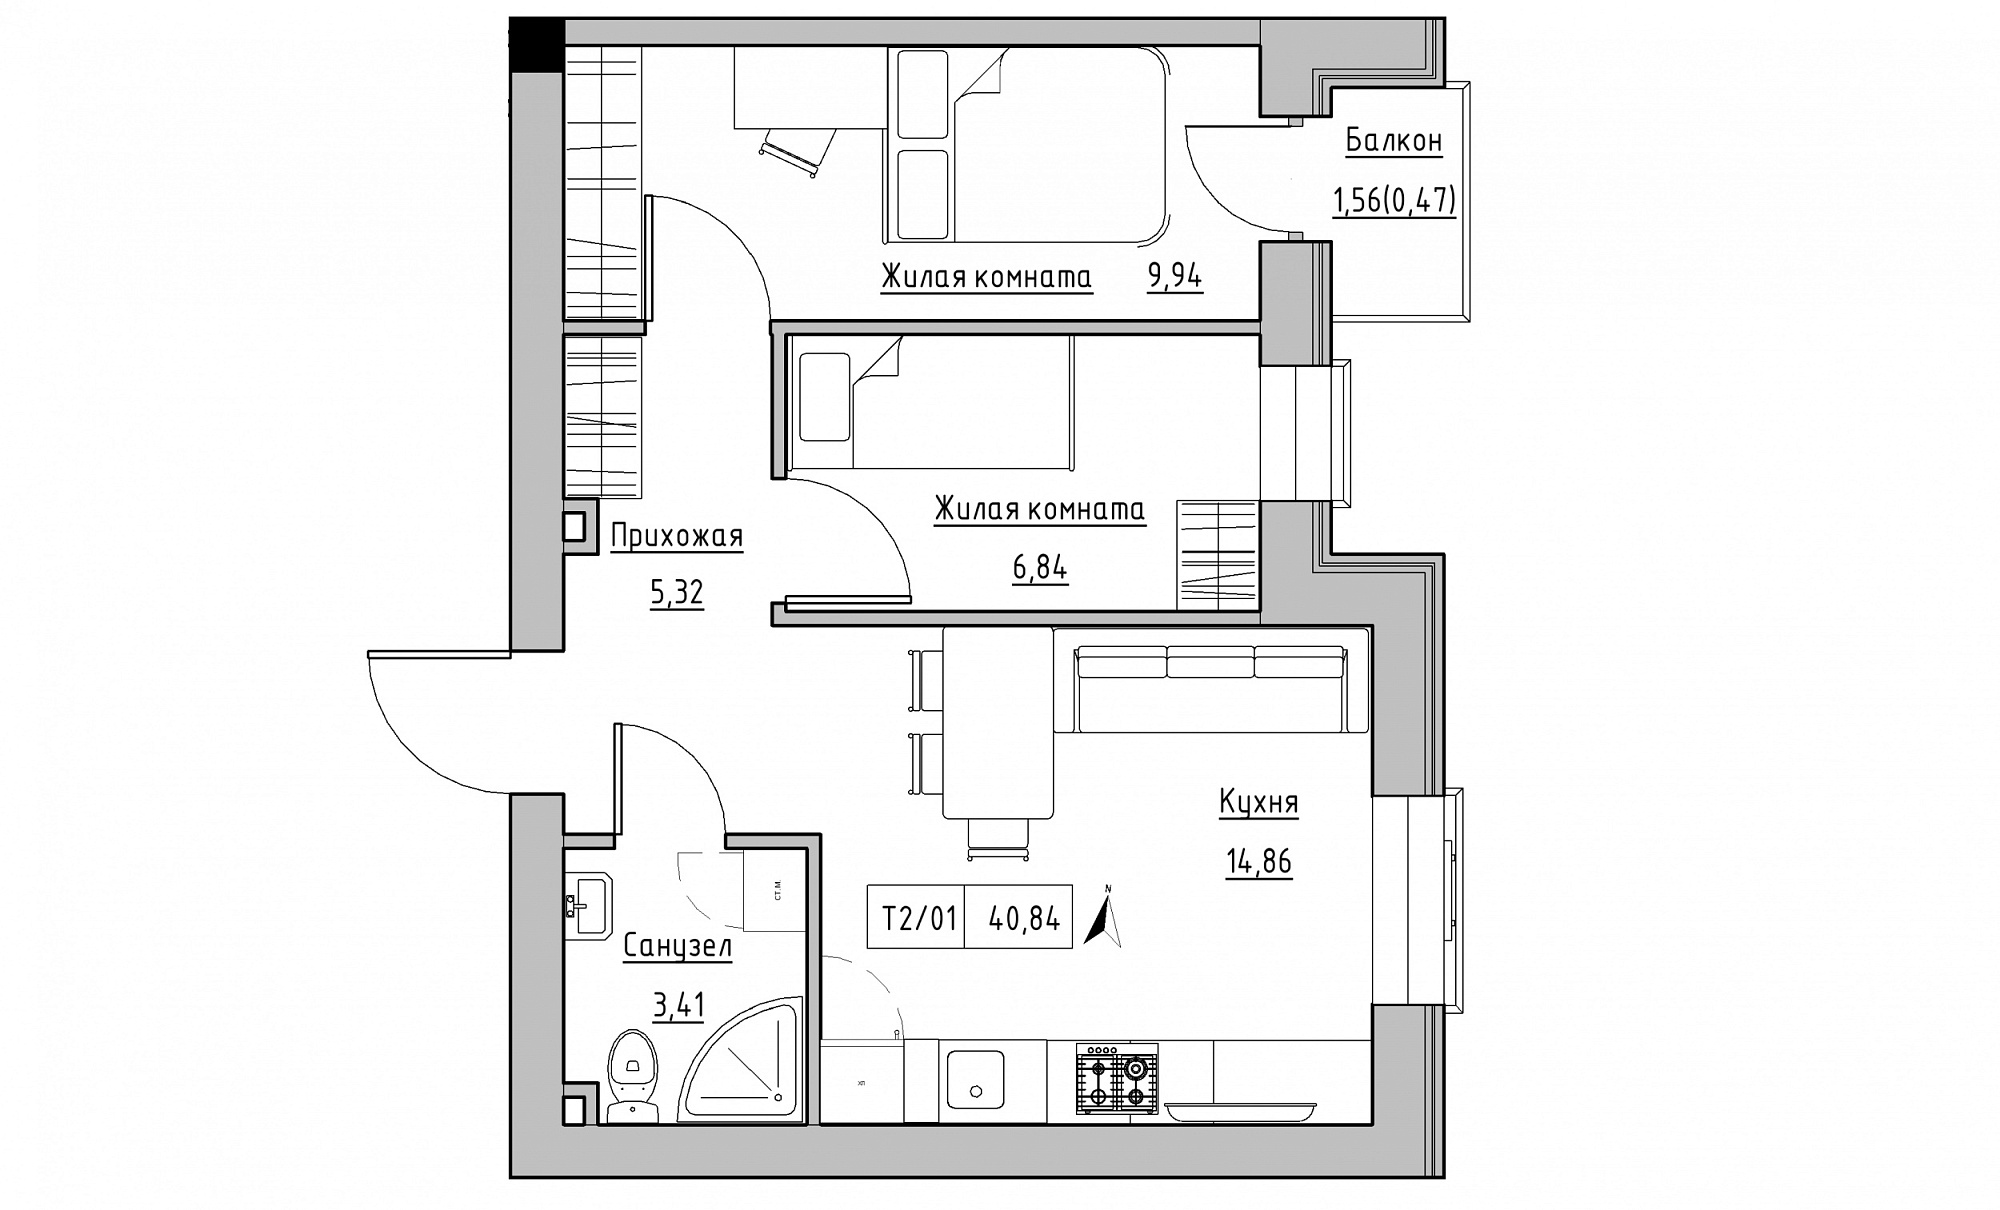 Planning 2-rm flats area 40.84m2, KS-015-04/0006.